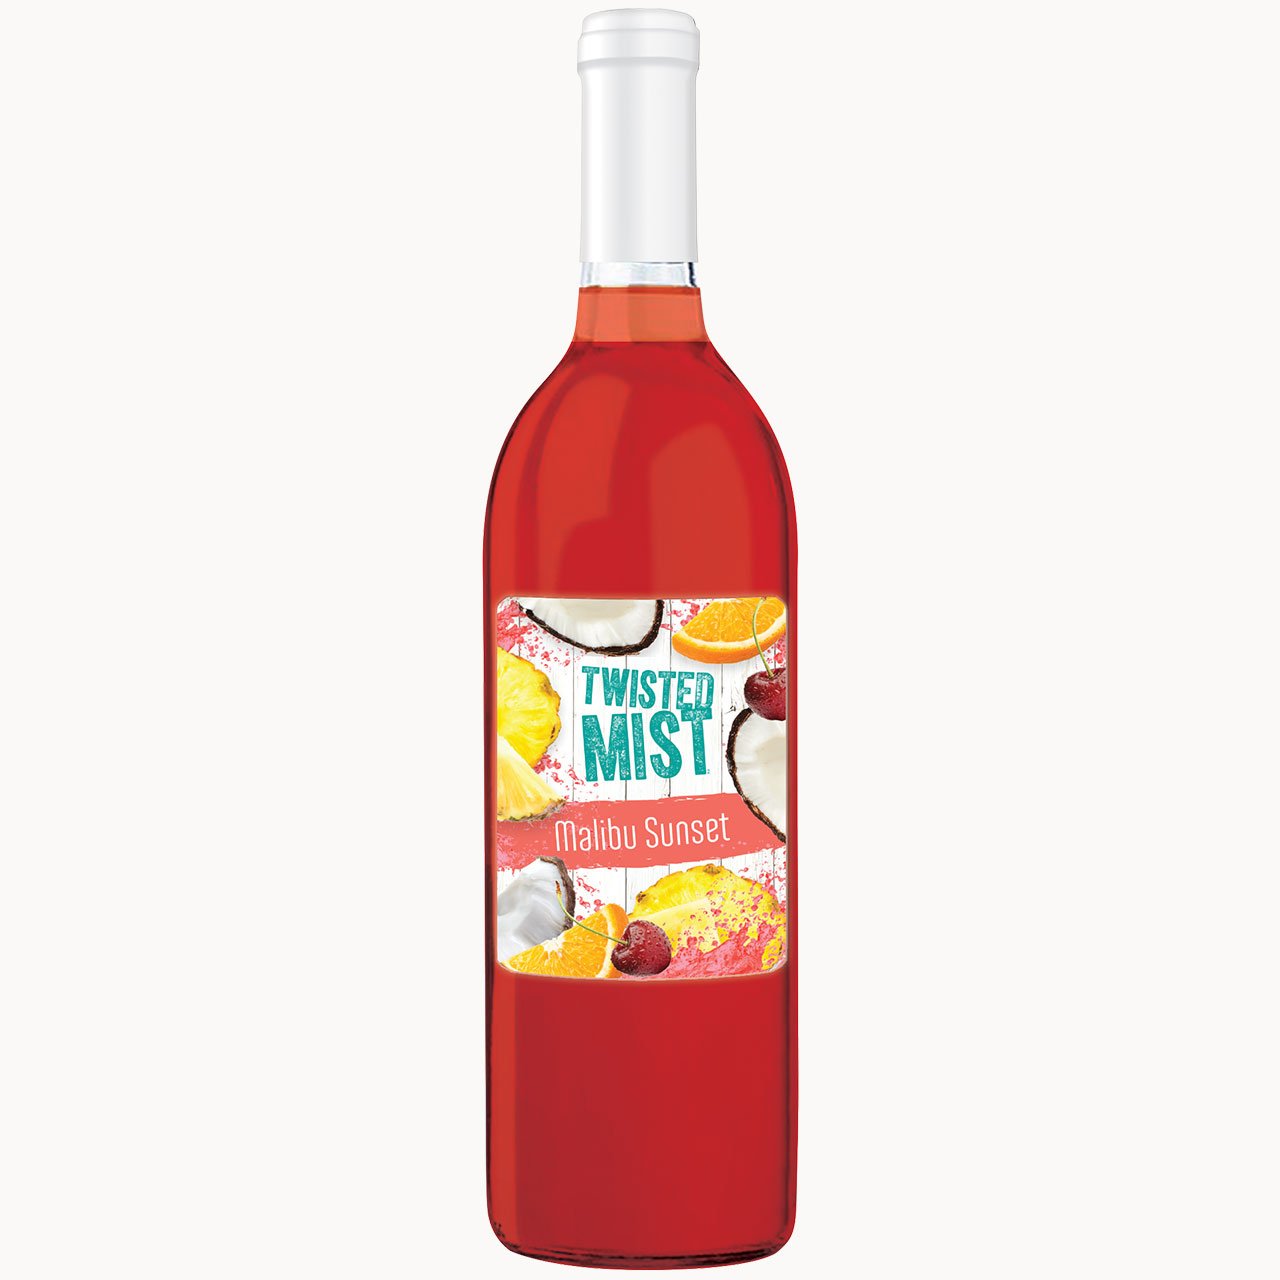 Winexpert Twisted Mist Malibu Sunset - Limited Edition